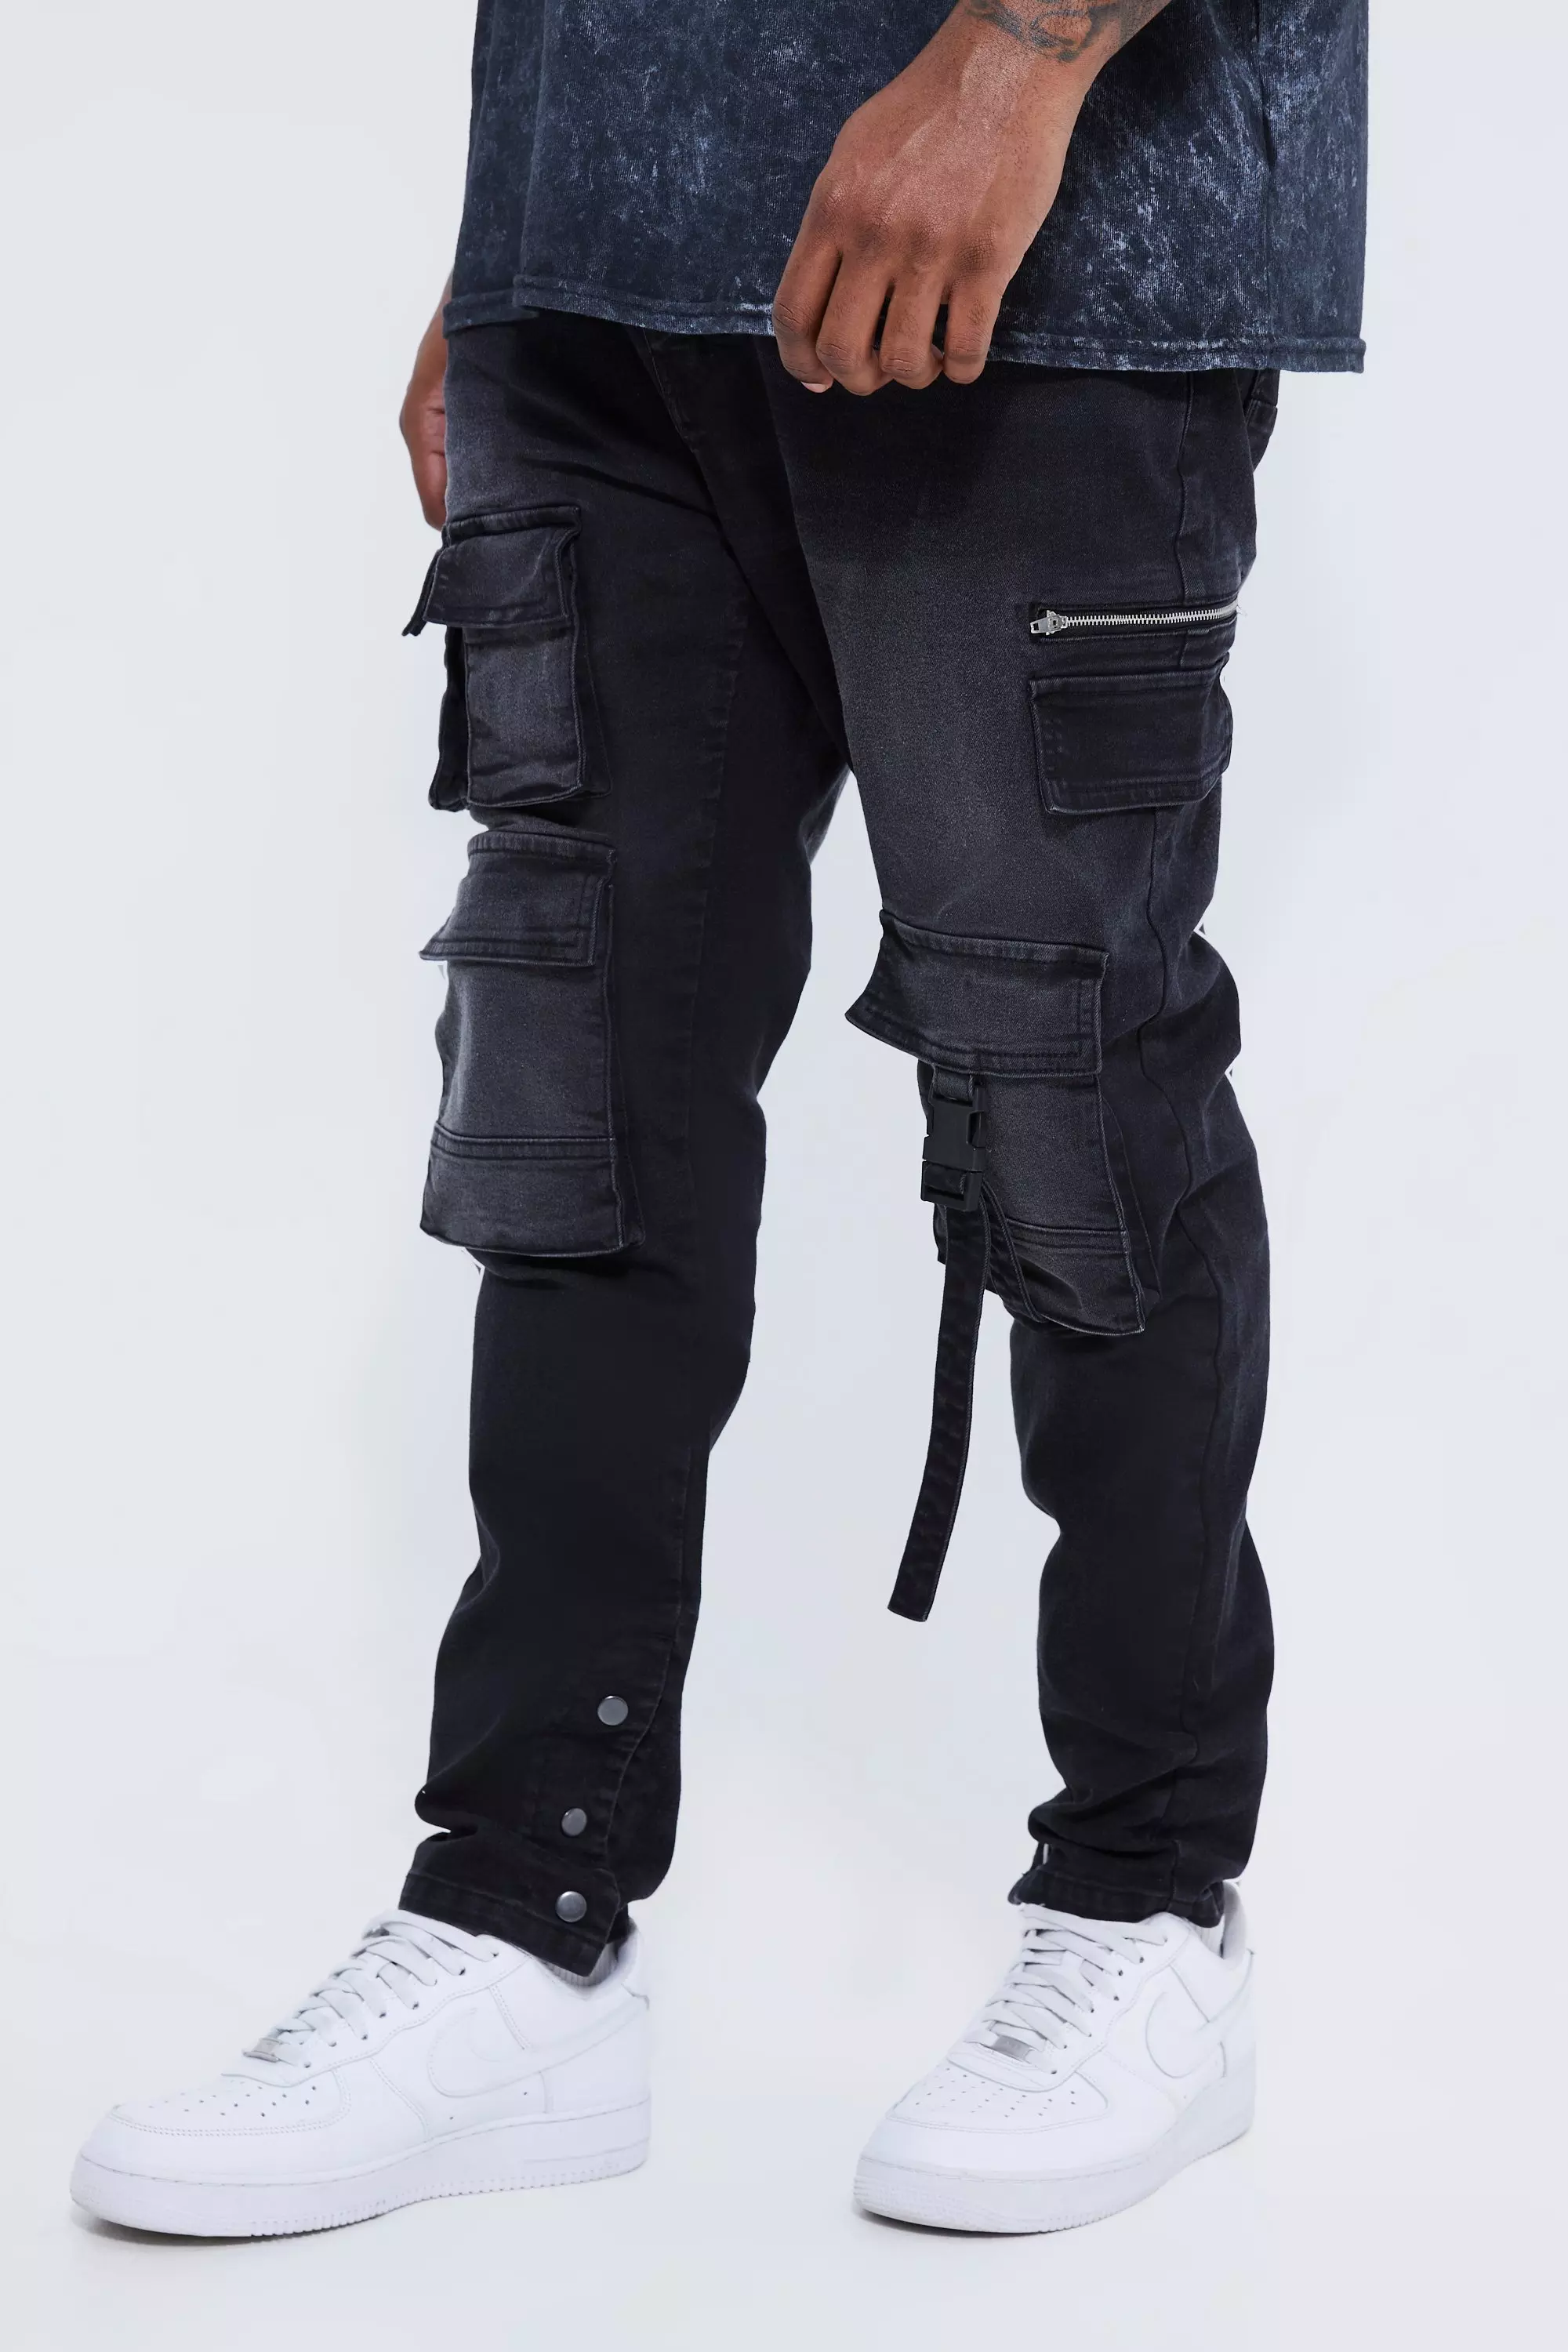 Buy NEXT Essential Stretch Jeans Slim Fit in Solid Black 2024